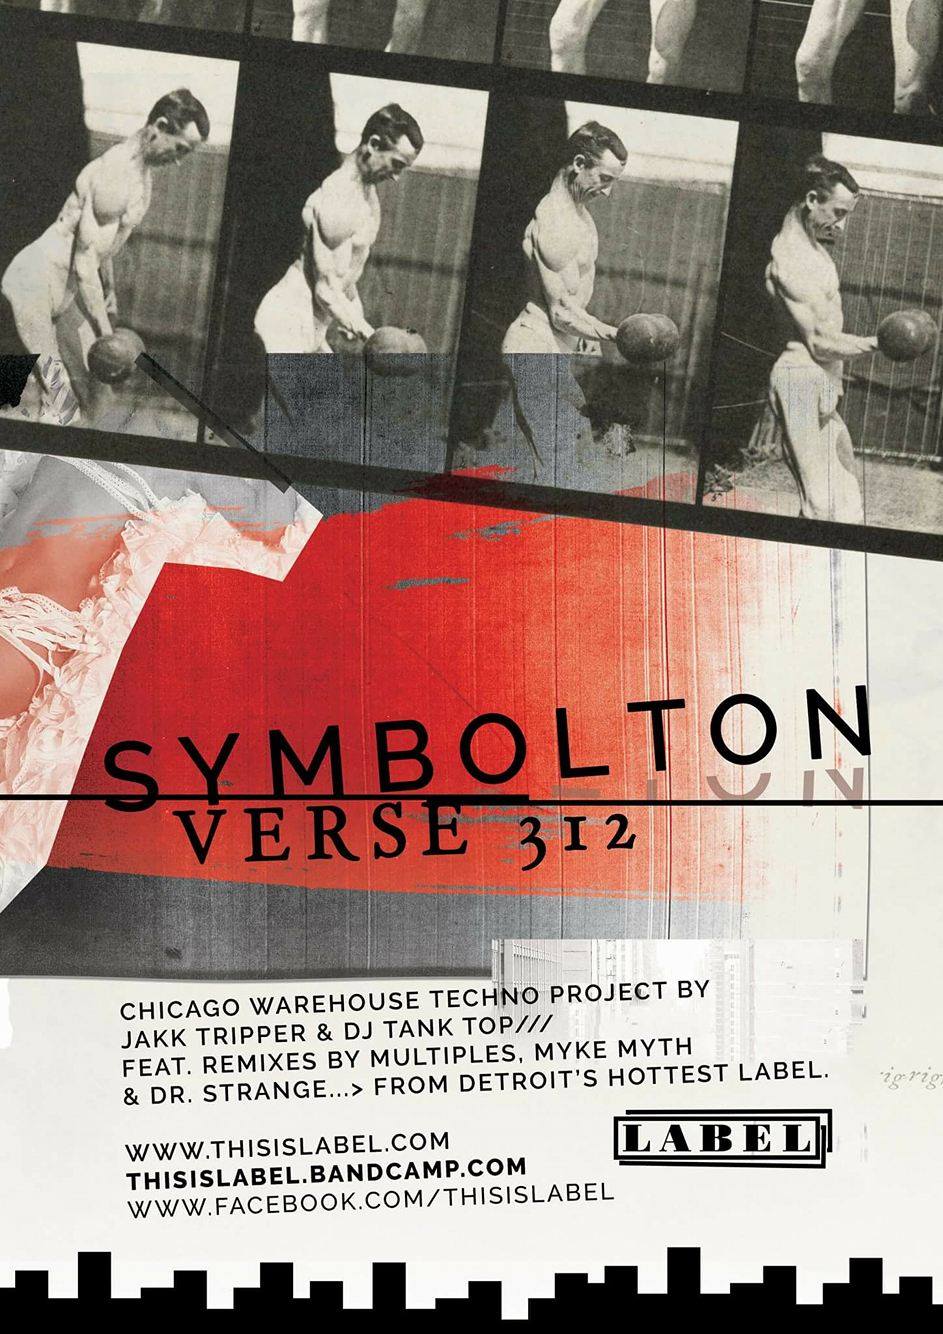 Detroit’s ‘LABEL’ Announces New Single Verse 312 from Symbolton